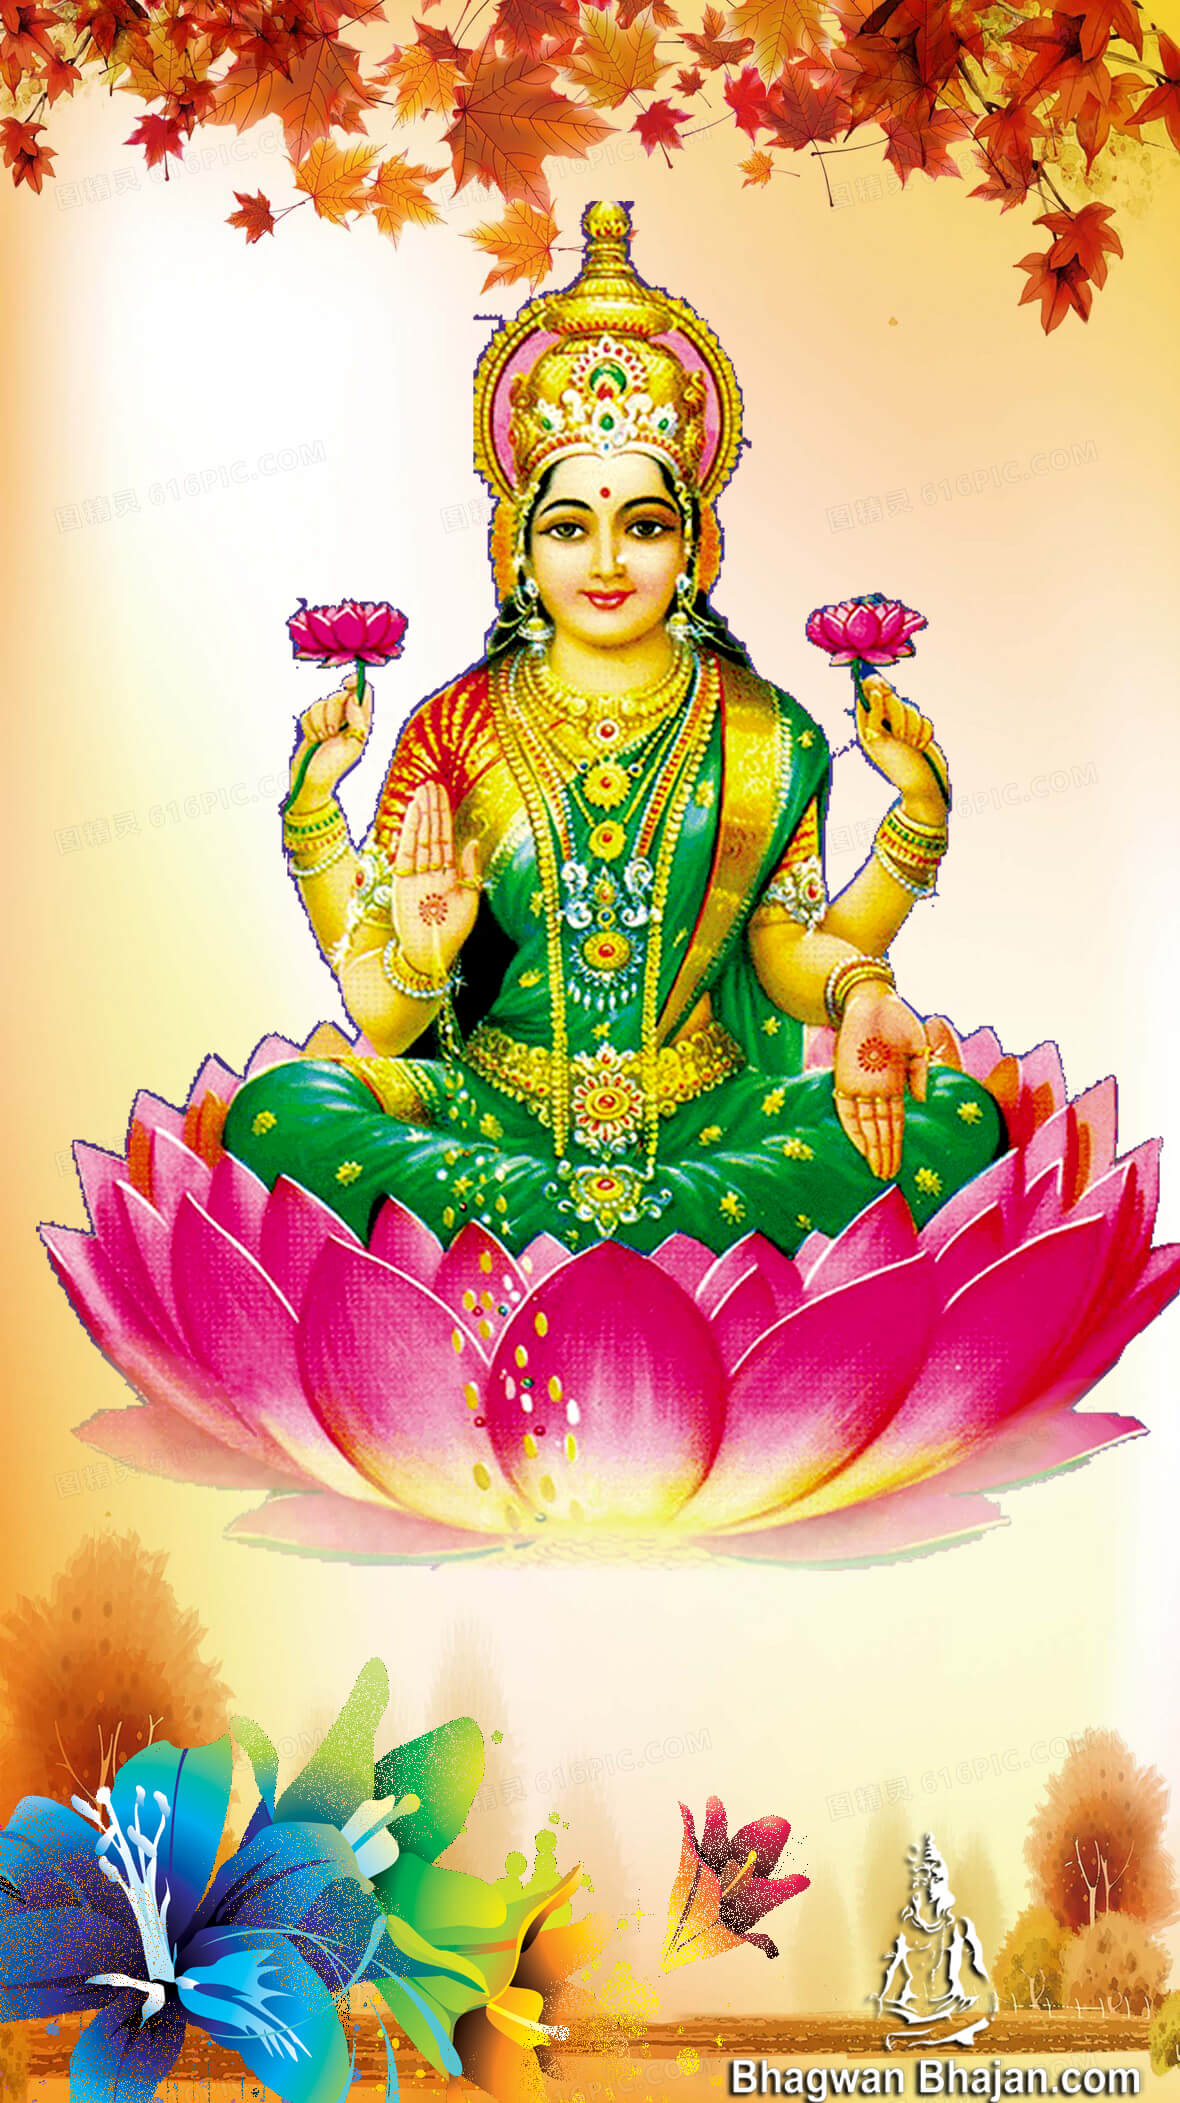 Download Free HD Wallpapers of Maa laxmi(lakshmi) Devi ...